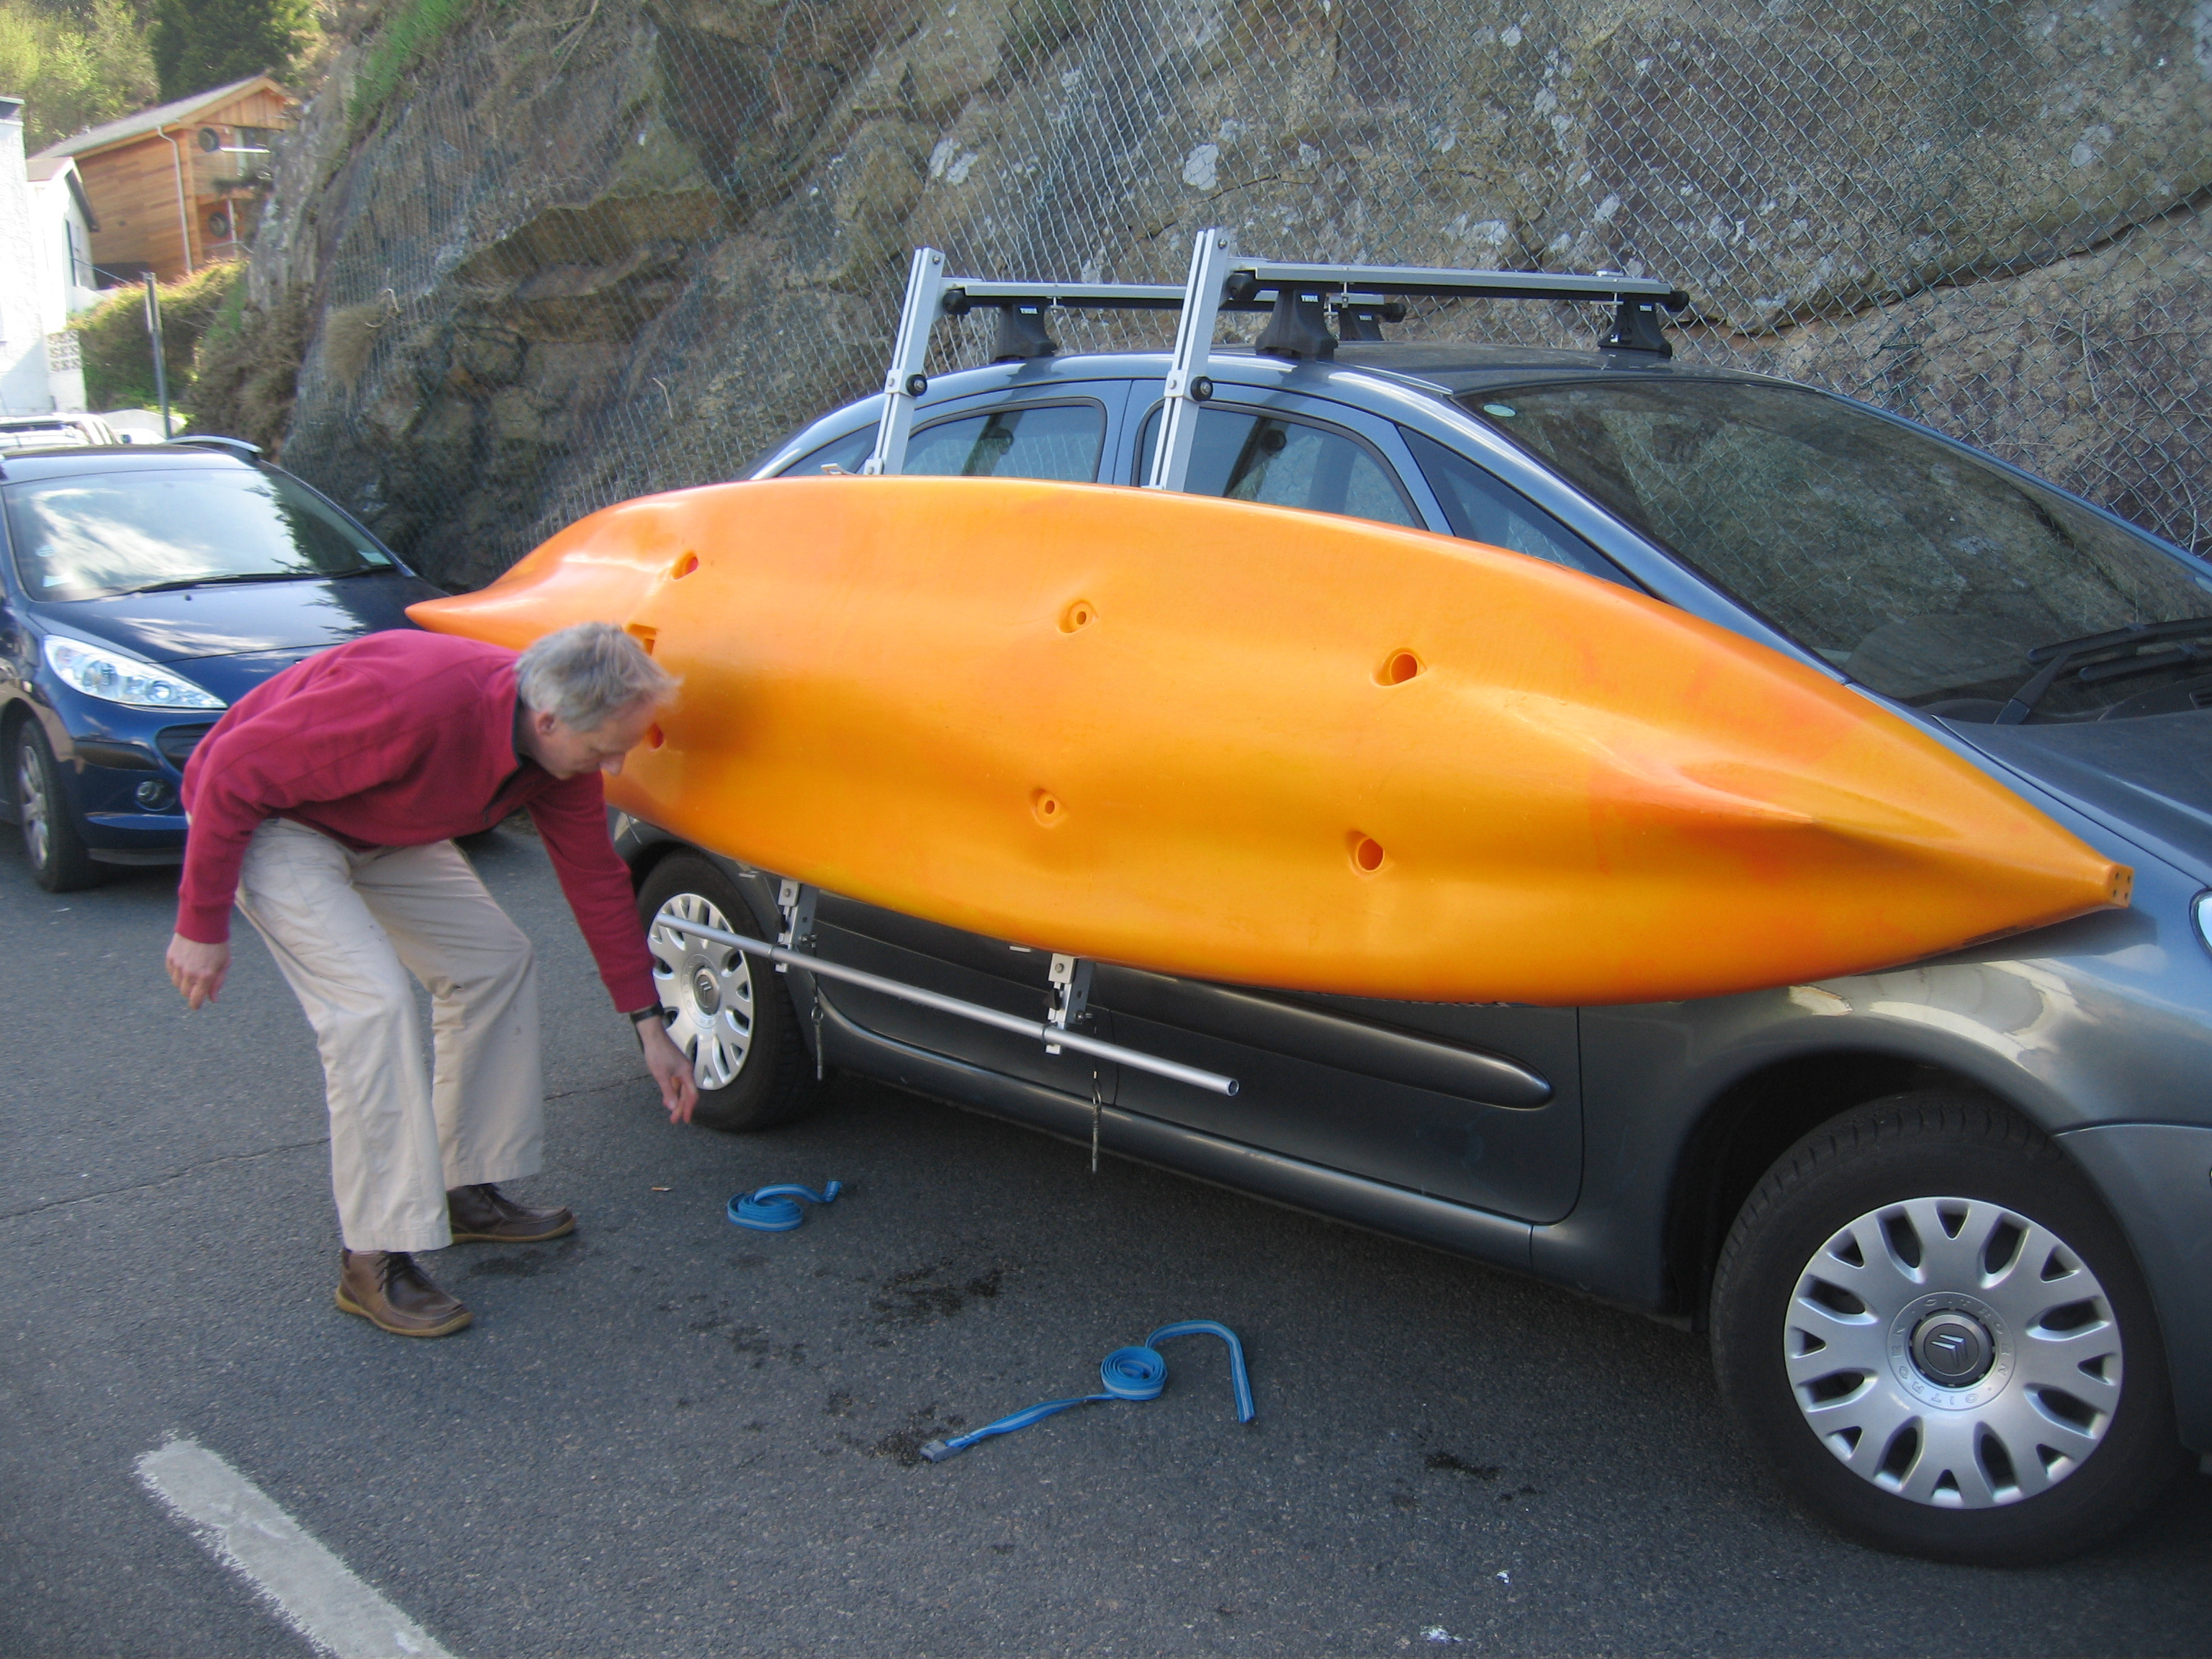 Best ideas about DIY Kayak Car Rack
. Save or Pin Diy kayak rack with wheels Now.